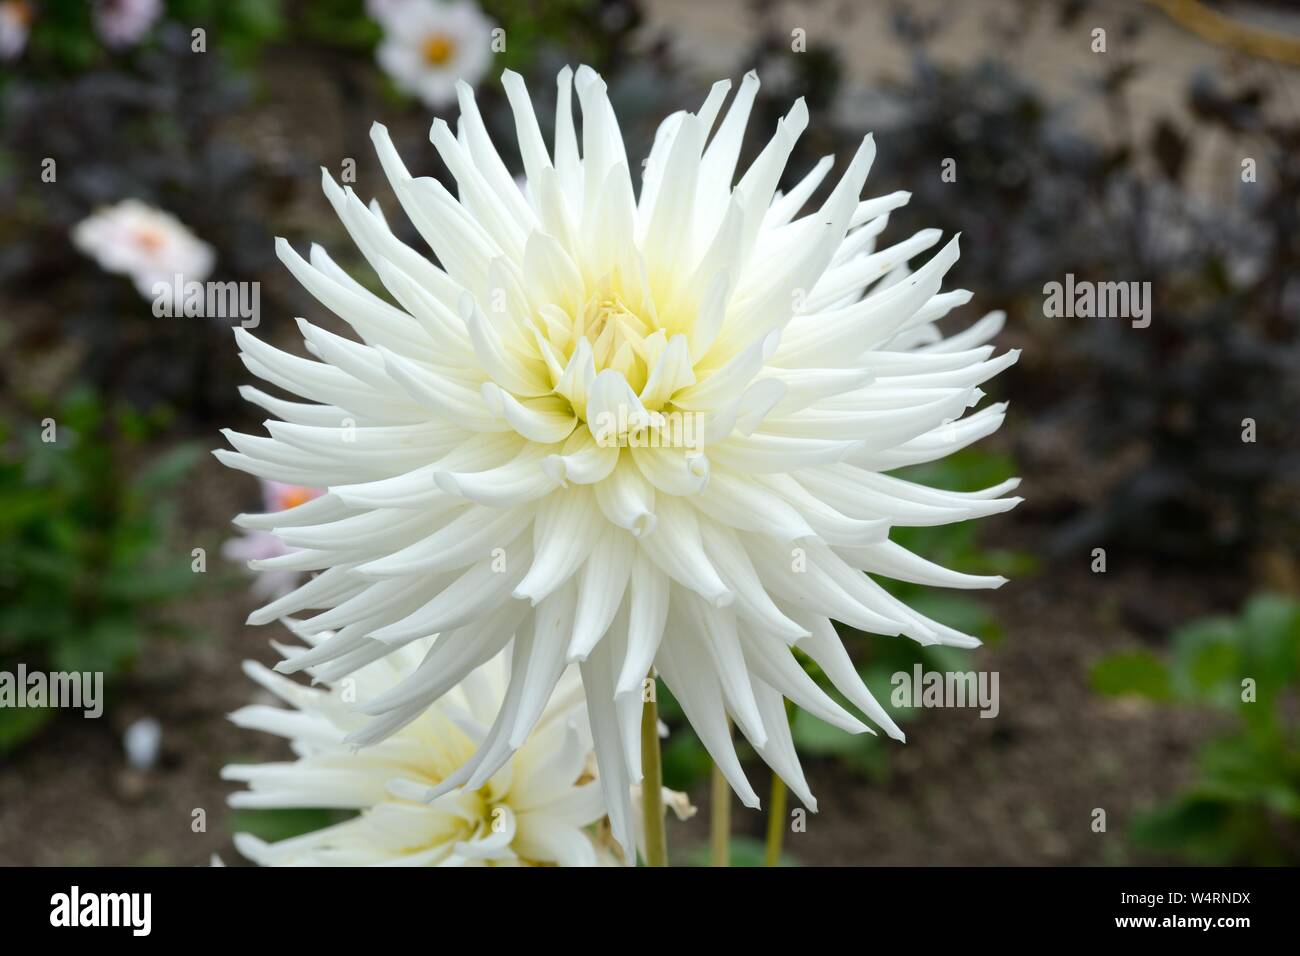 Dahlia My Love semi cactus dahlia white flowers with greenish yellow hearts Stock Photo